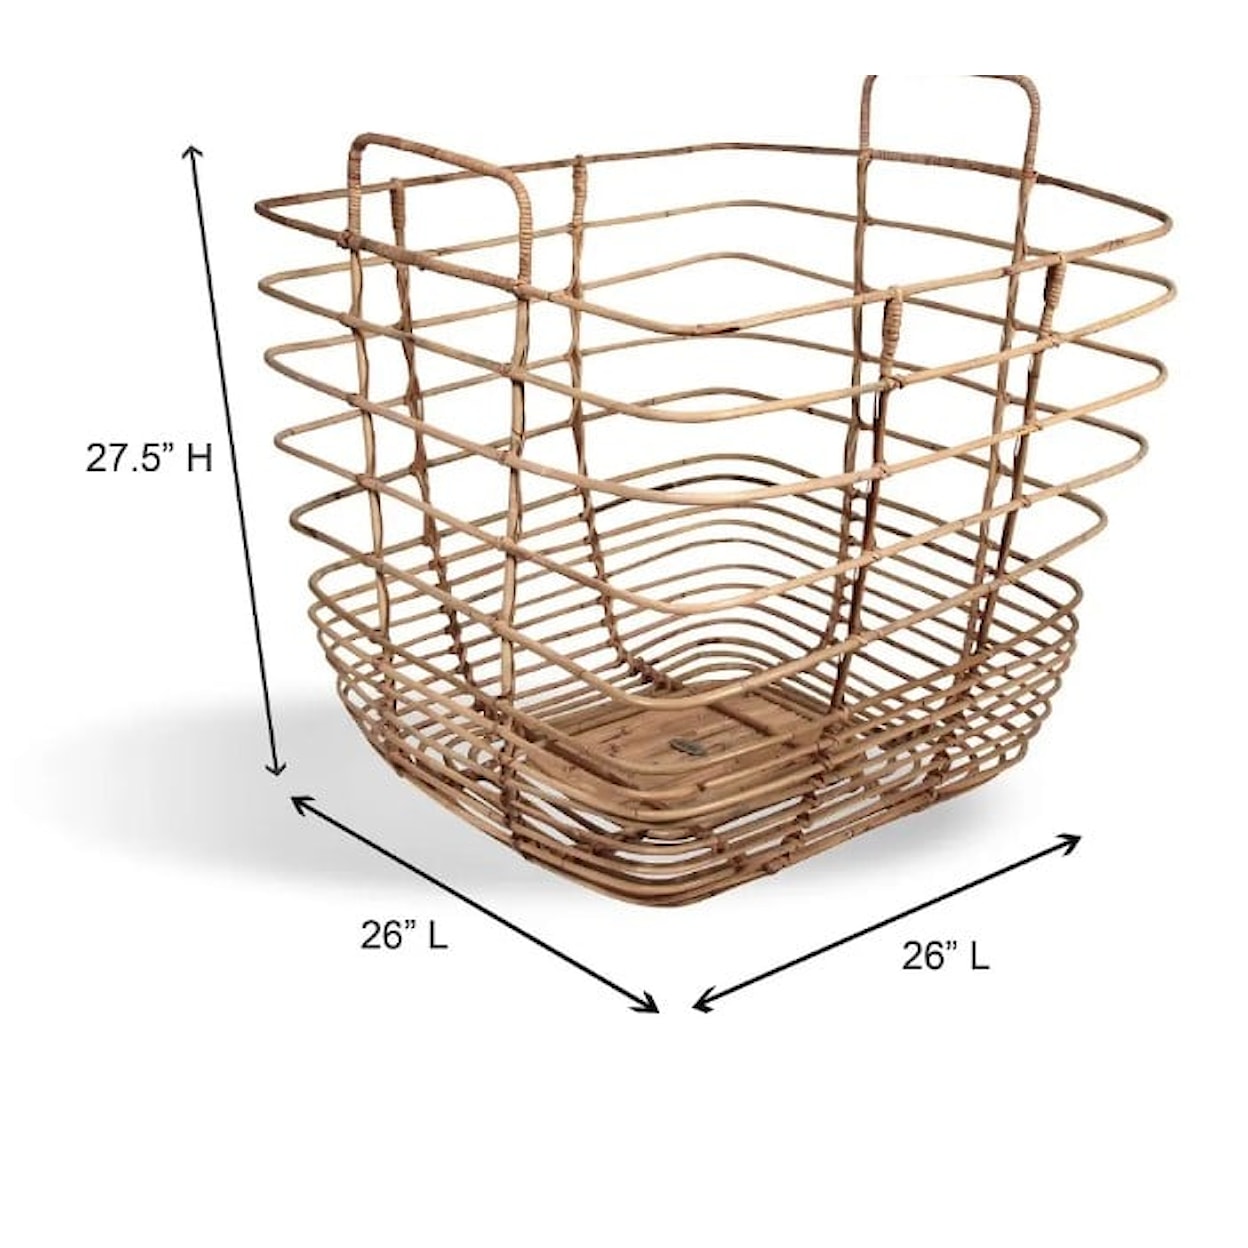 Ibolili Baskets and Sets THERMAL SPA RATTAN BASKET